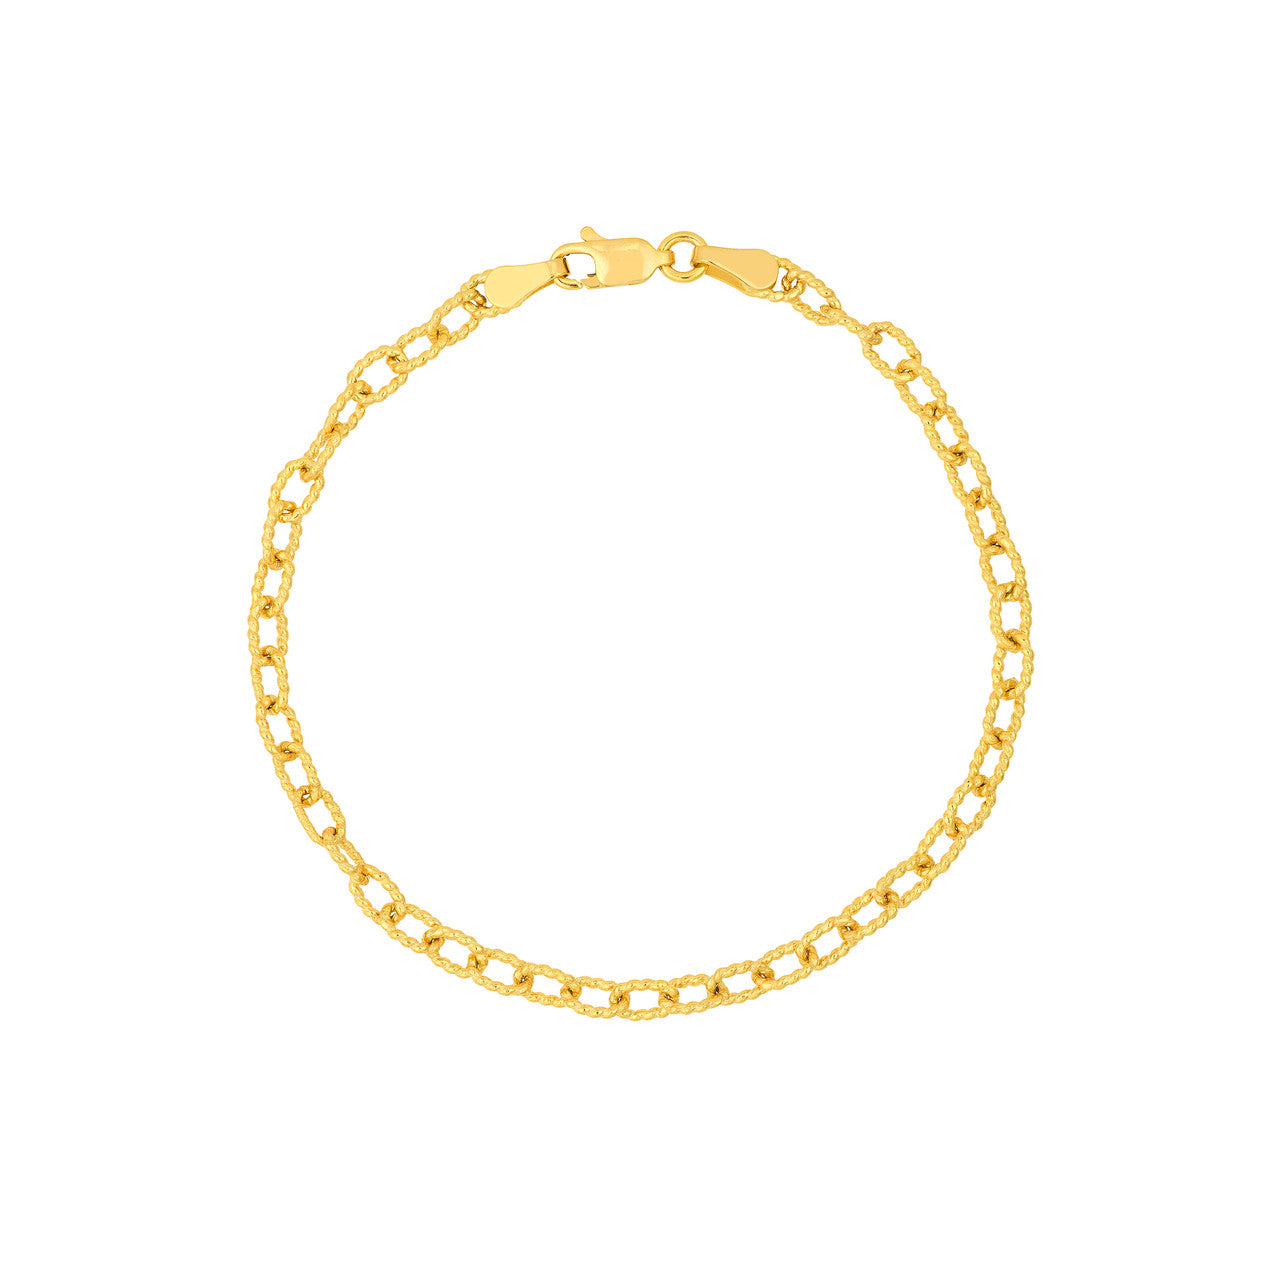 14k Yellow Gold Twisted Forzentina Bracelet Choker Necklace Pendant Chain